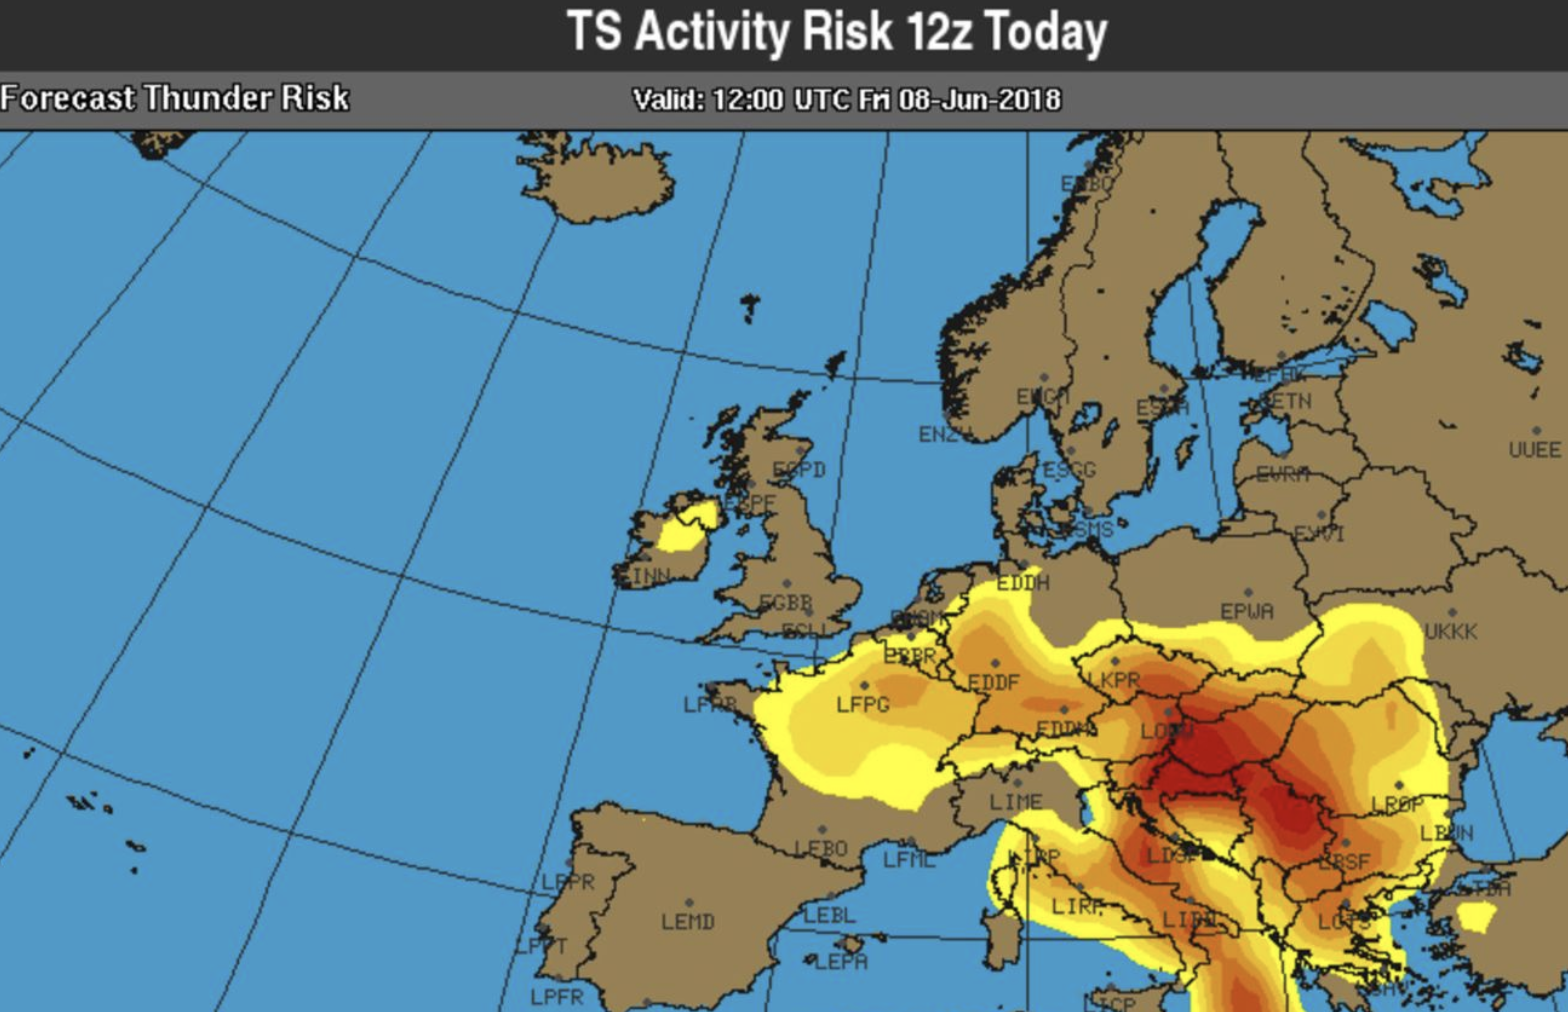 Storm warning: Forecast of thunderstorm activity across Europe